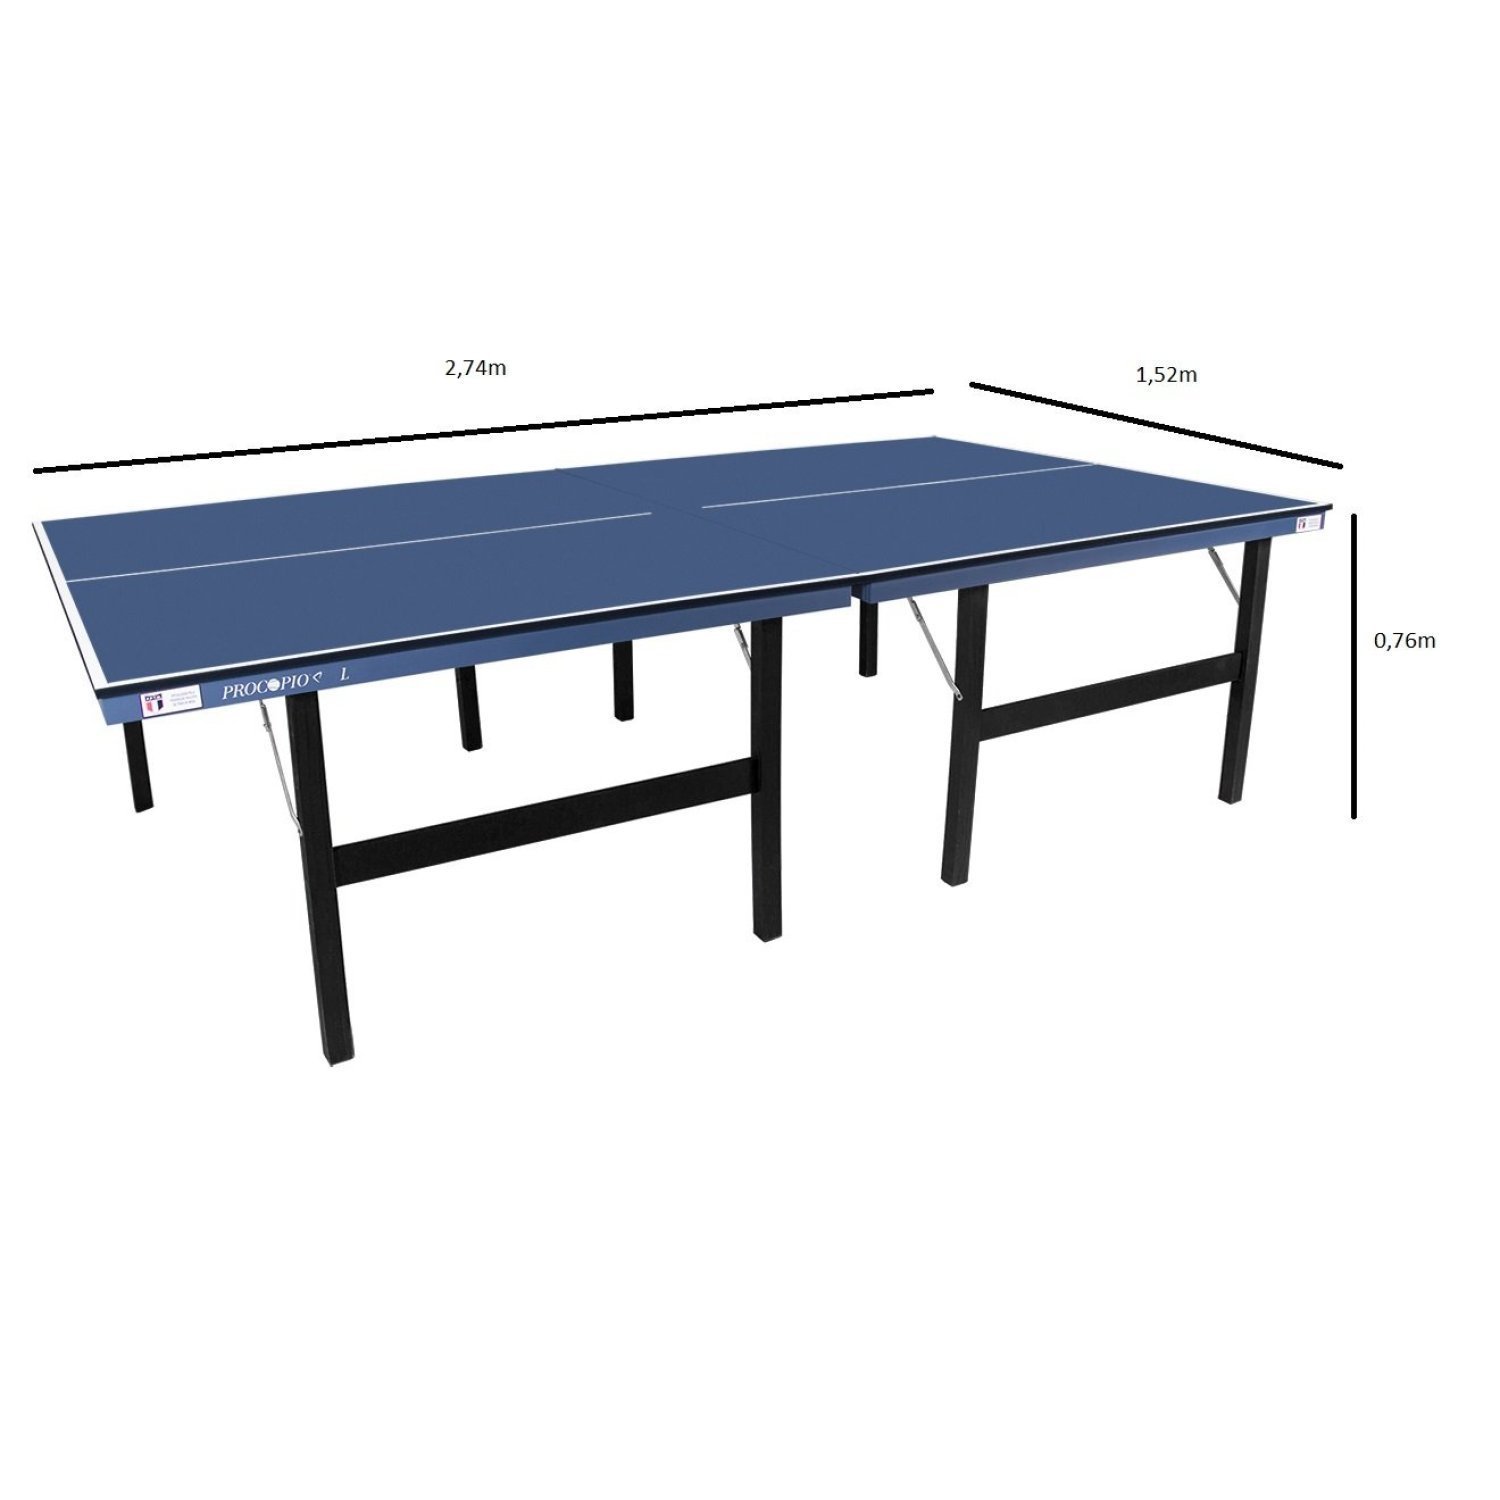 Mesa de Tênis de Mesa Ping Pong Olimpic 1014 MDP 12mm - Estilo Esportivo